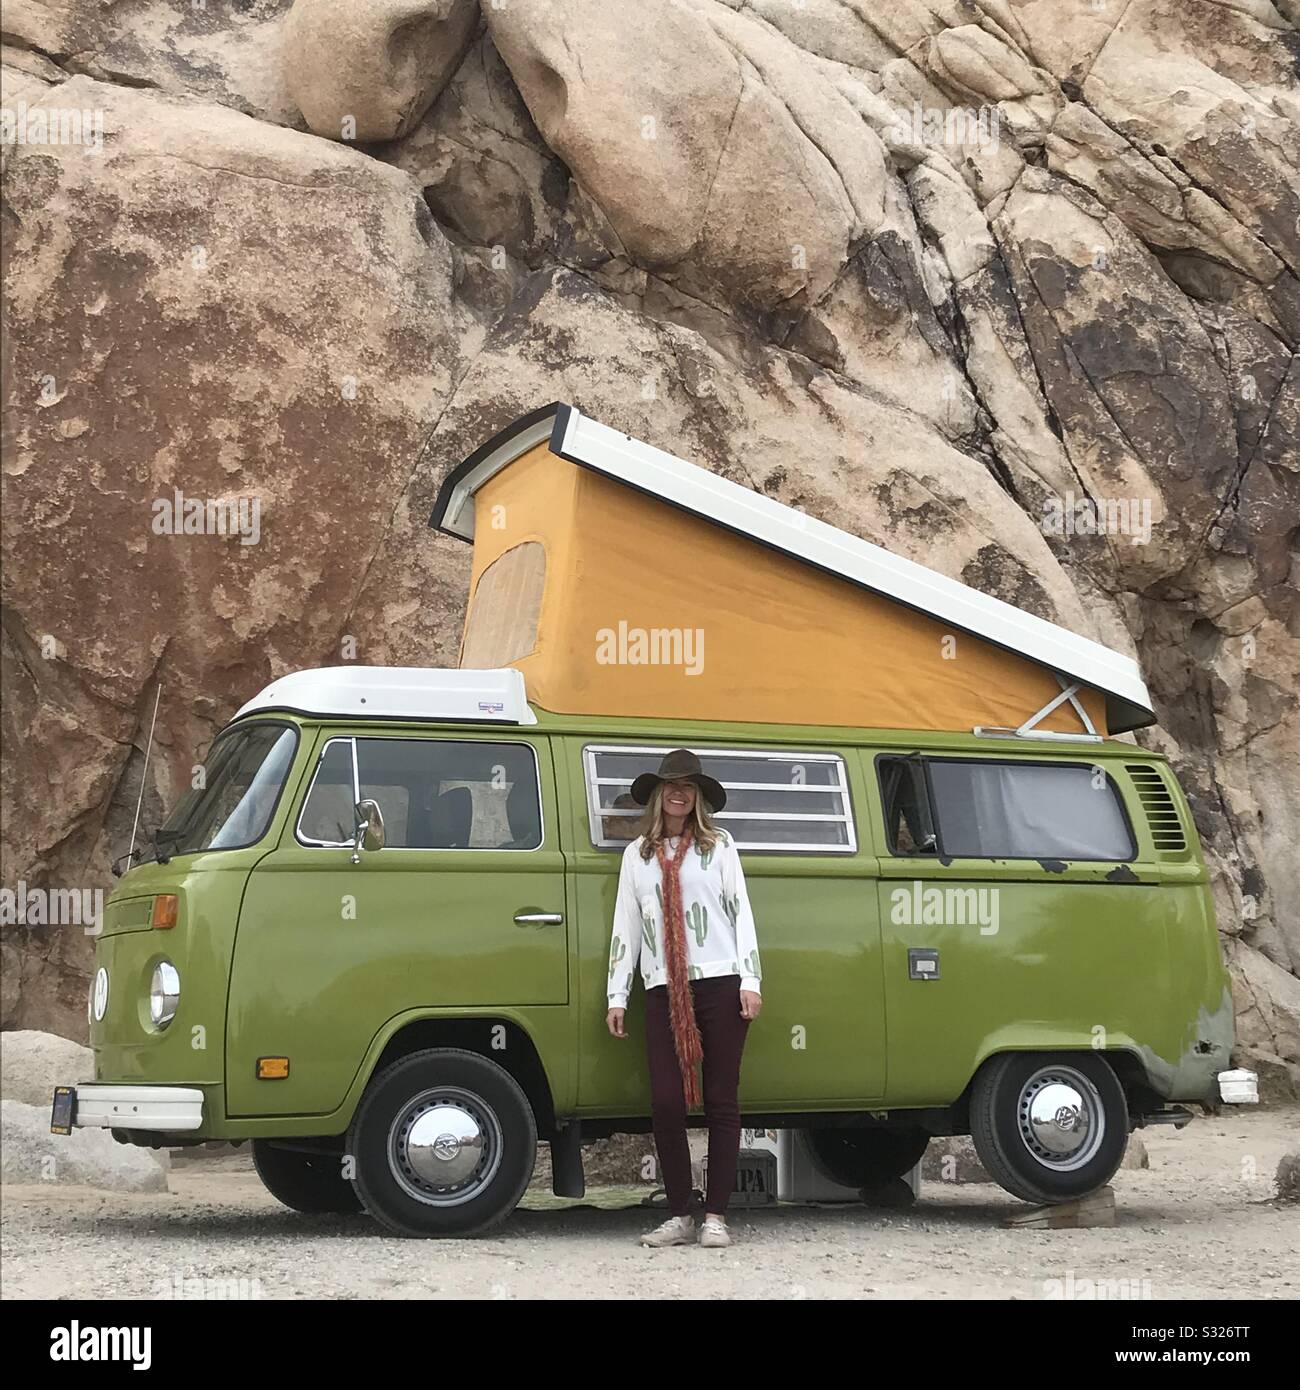 VW Bus Camper van pop up with woman at 